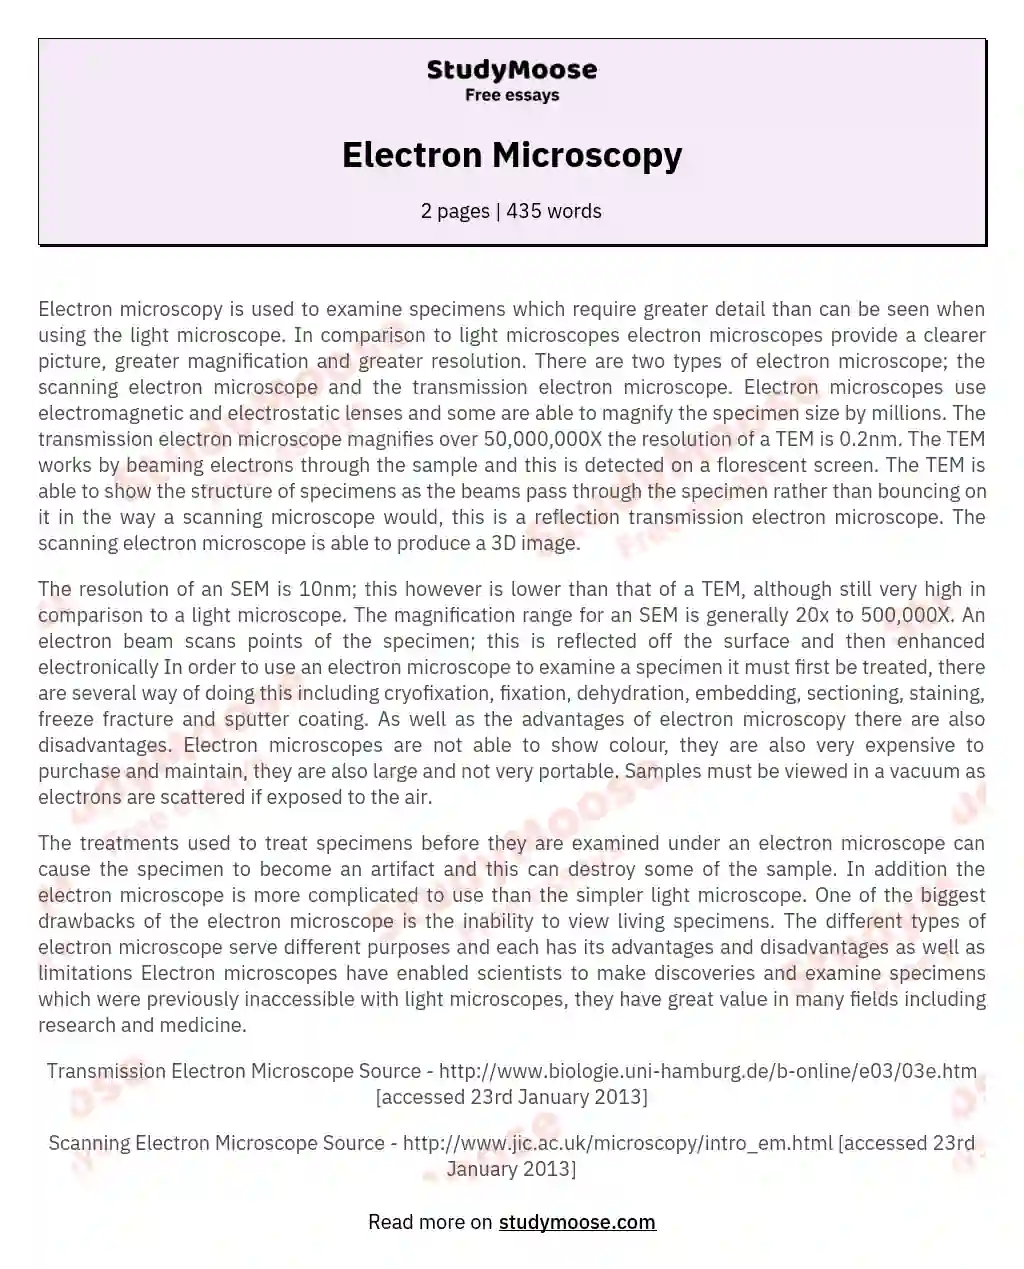 Electron Microscopy essay